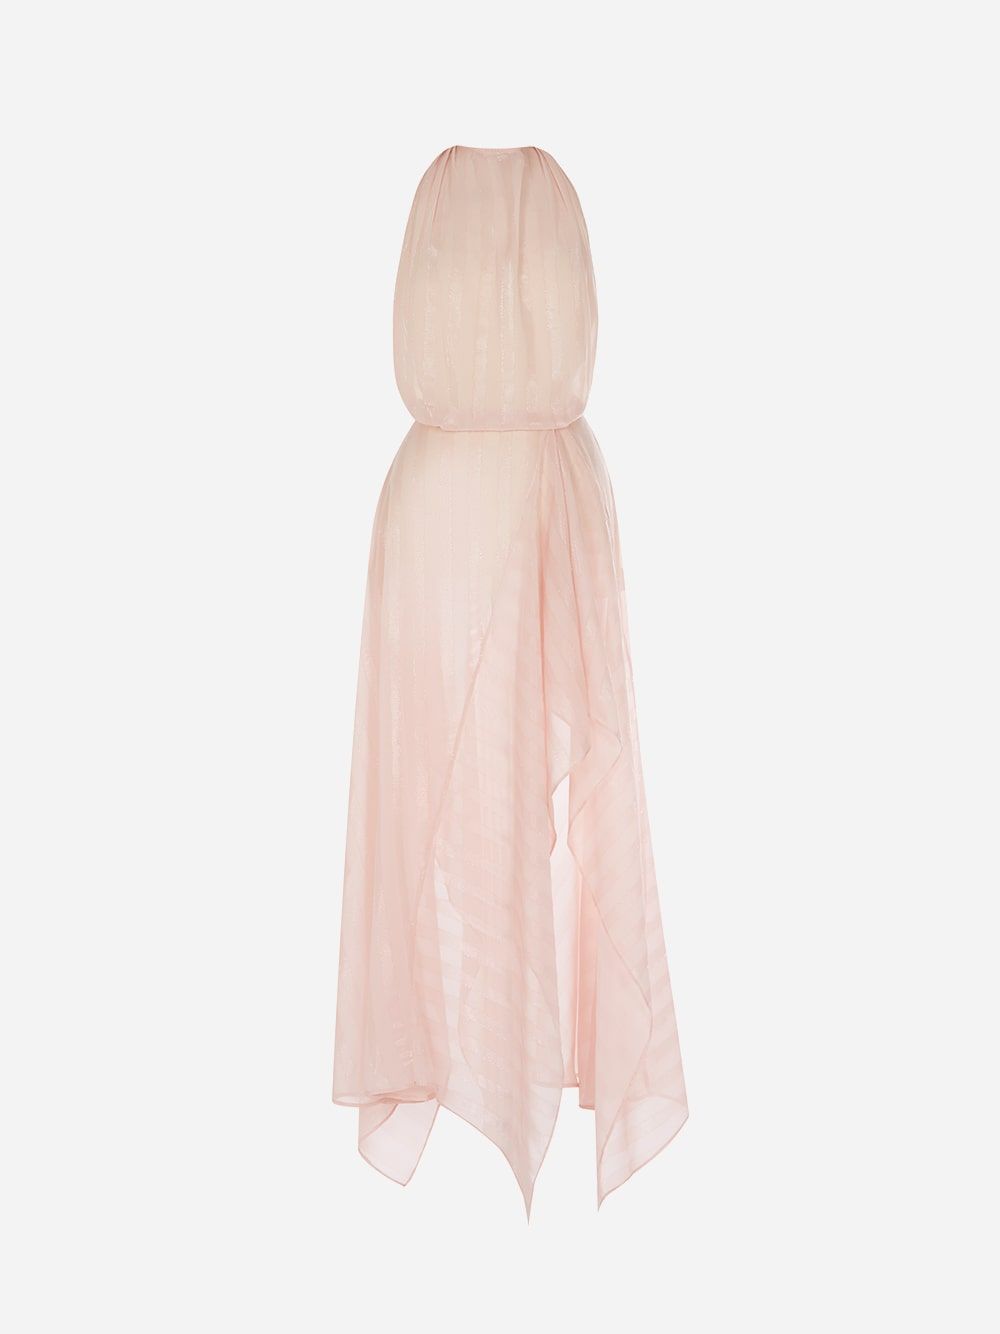 Pink Asymmetric Dress | Diogo Miranda 